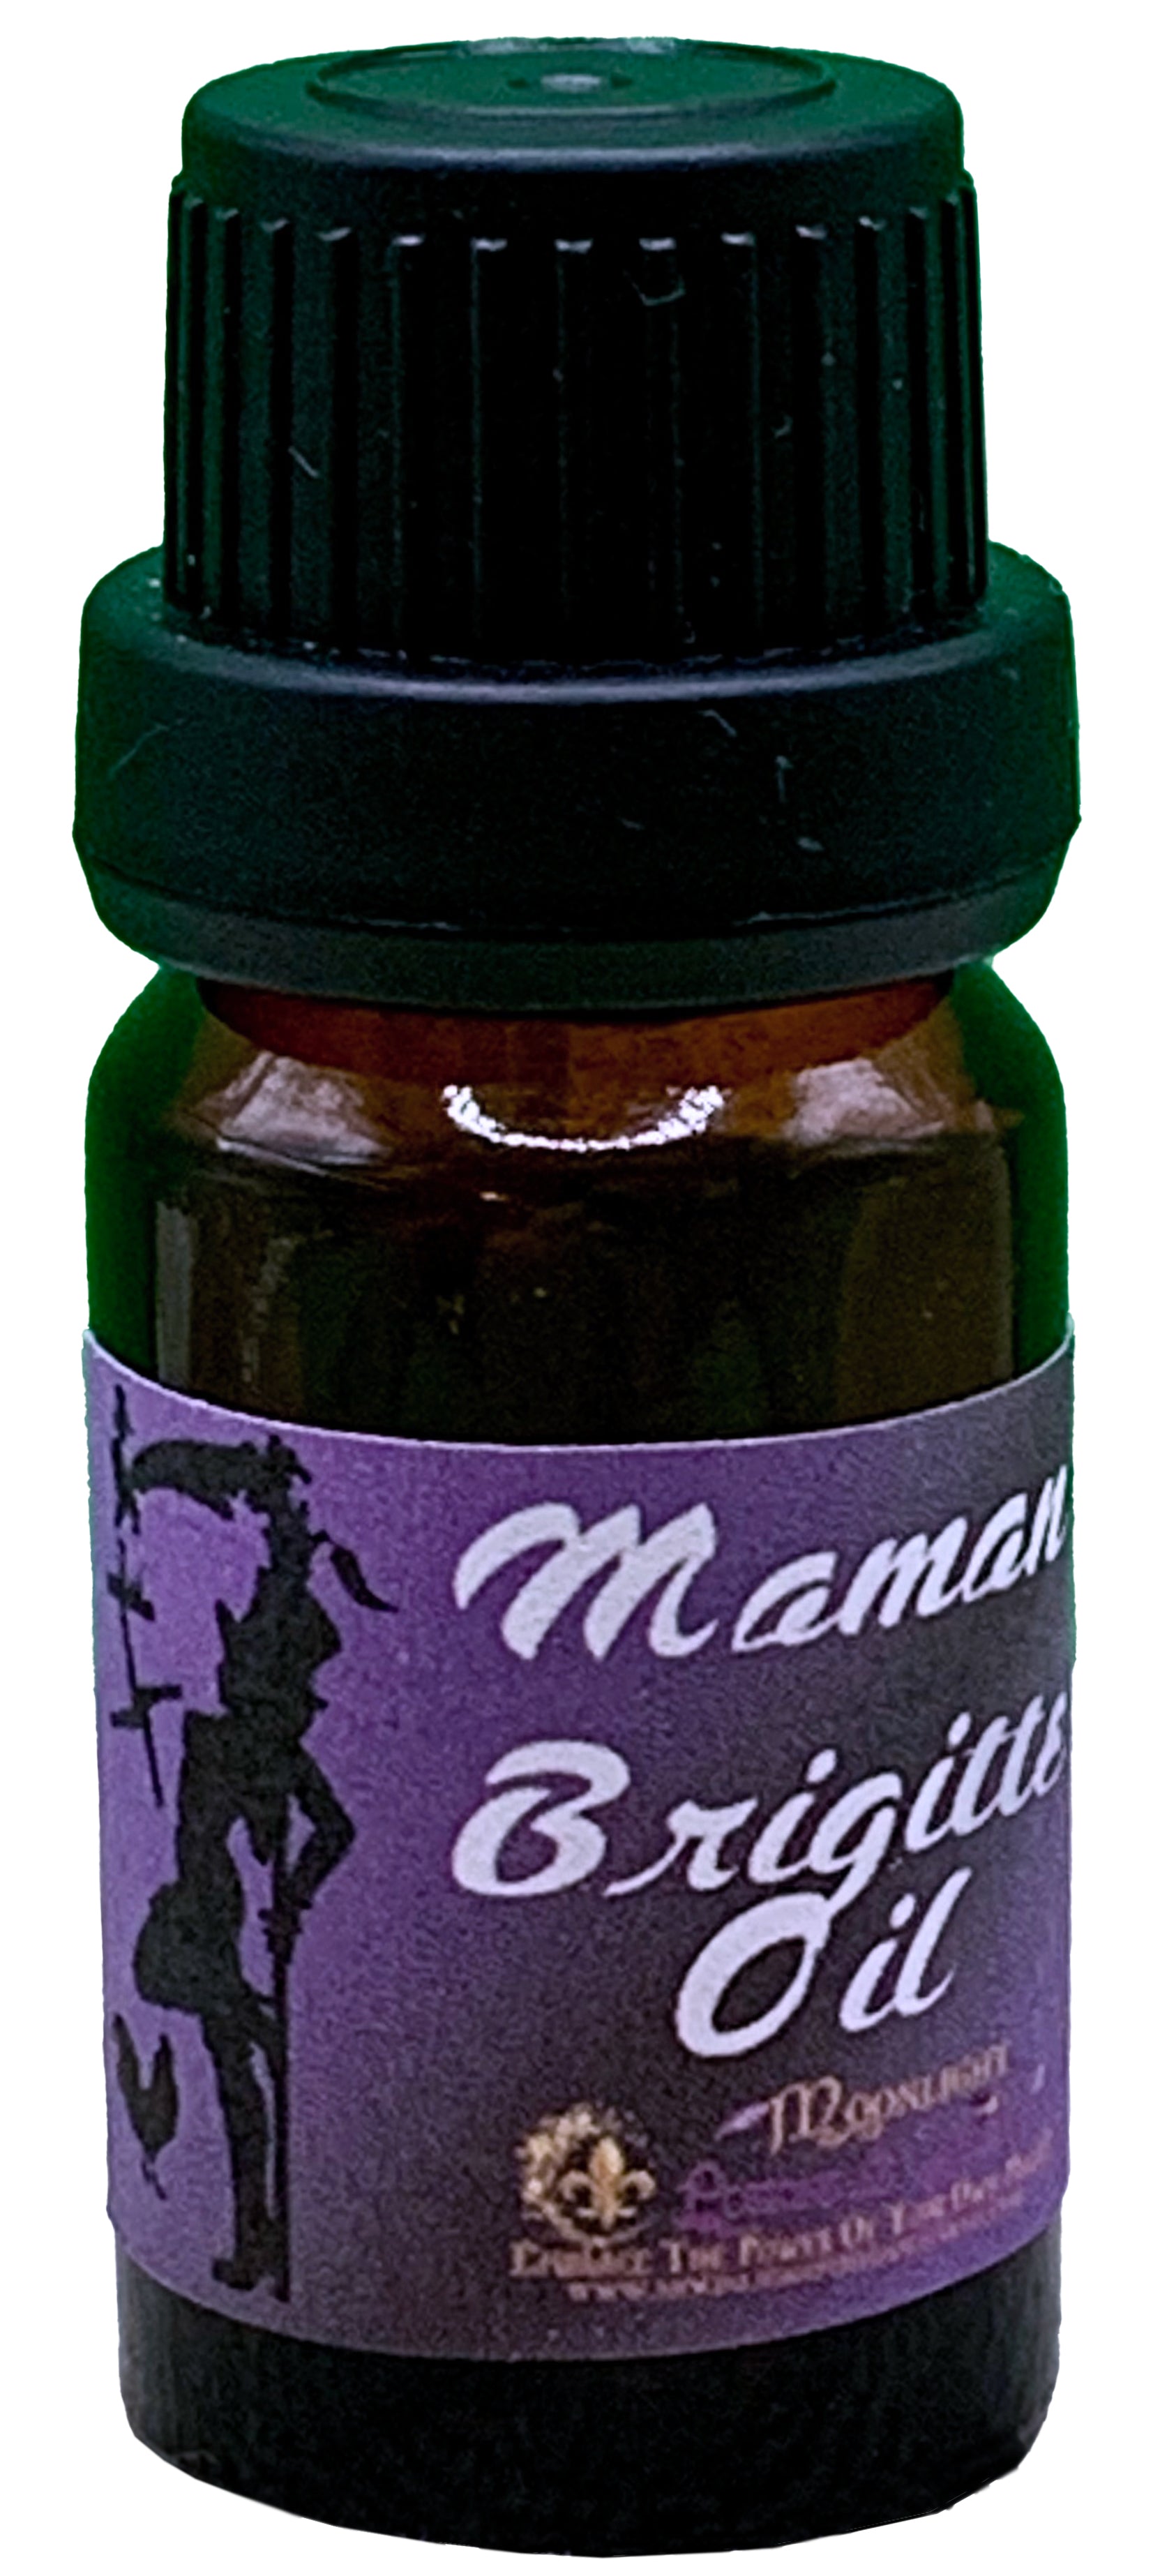 Maman Brigitte Oil 10 ml - Moonlight Potions & Charms